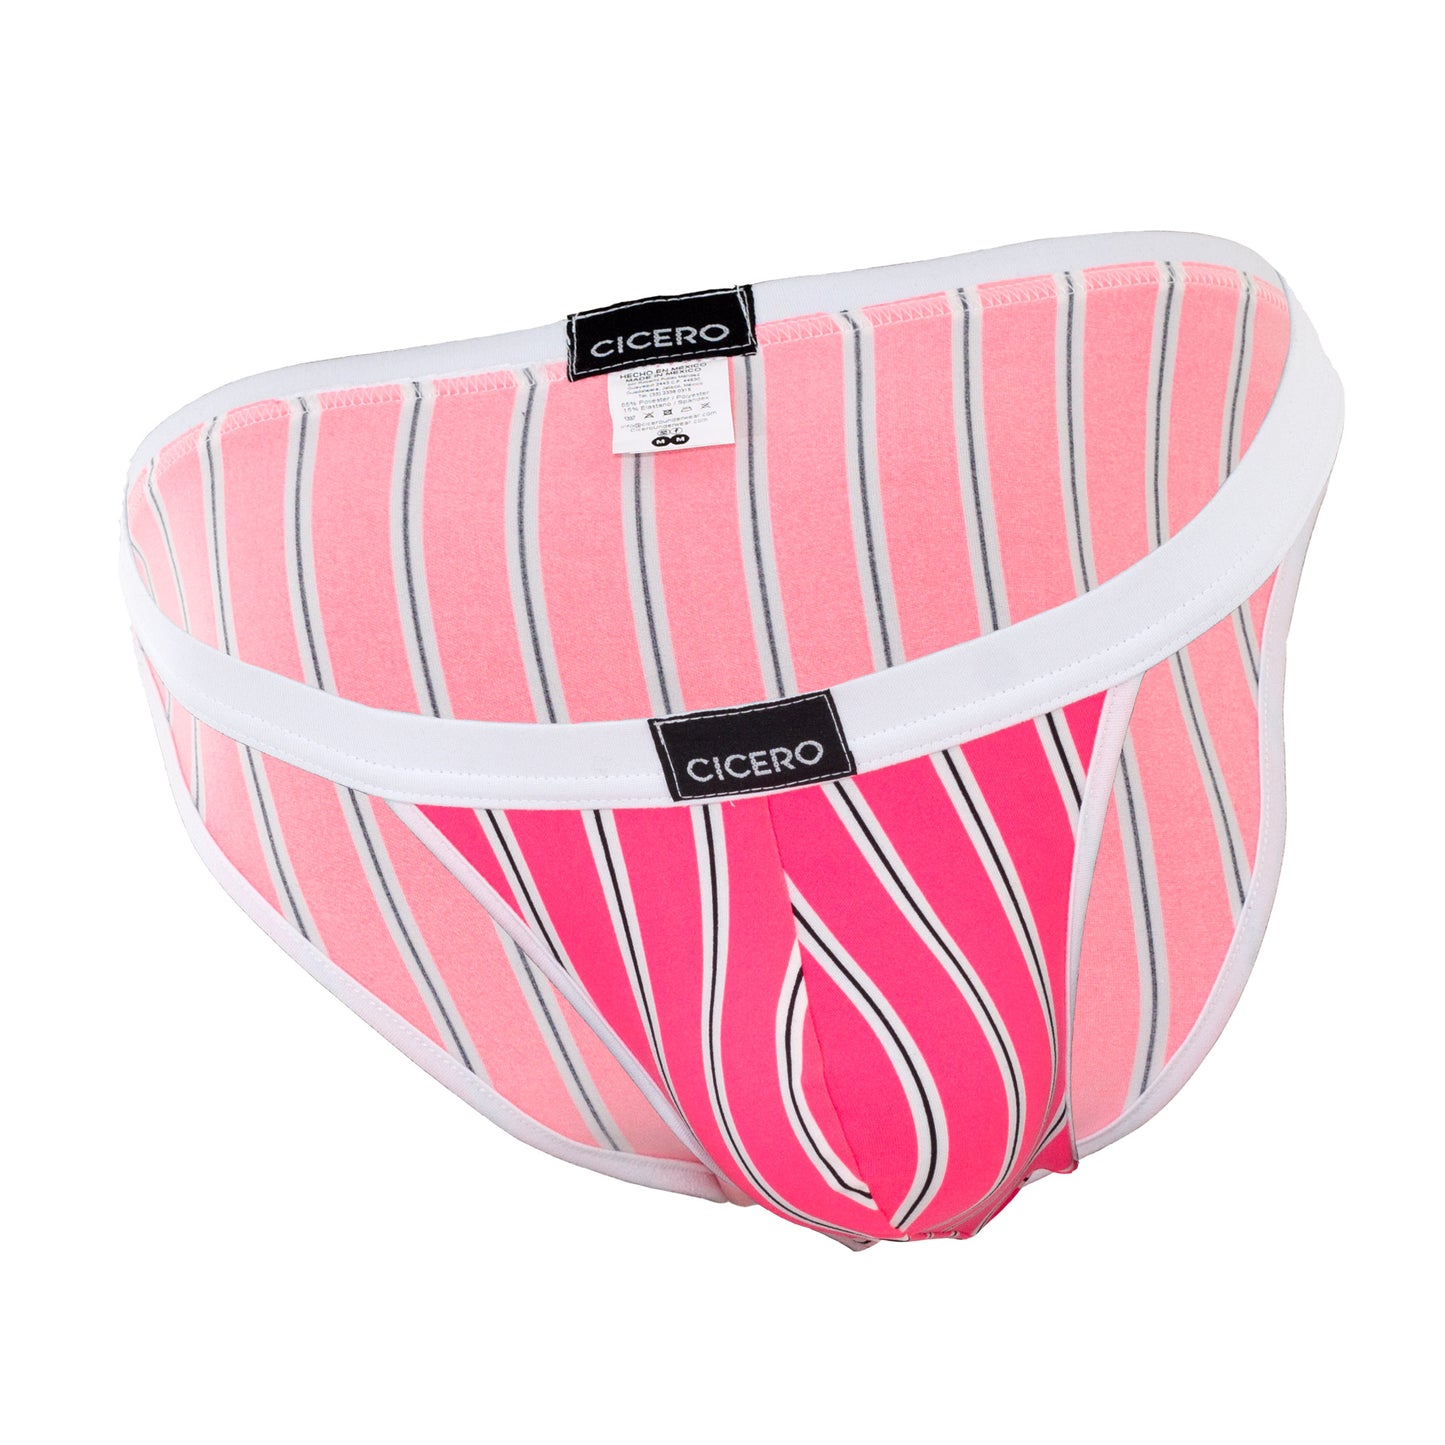 SB0013 Brief neon pink striped bikini with black